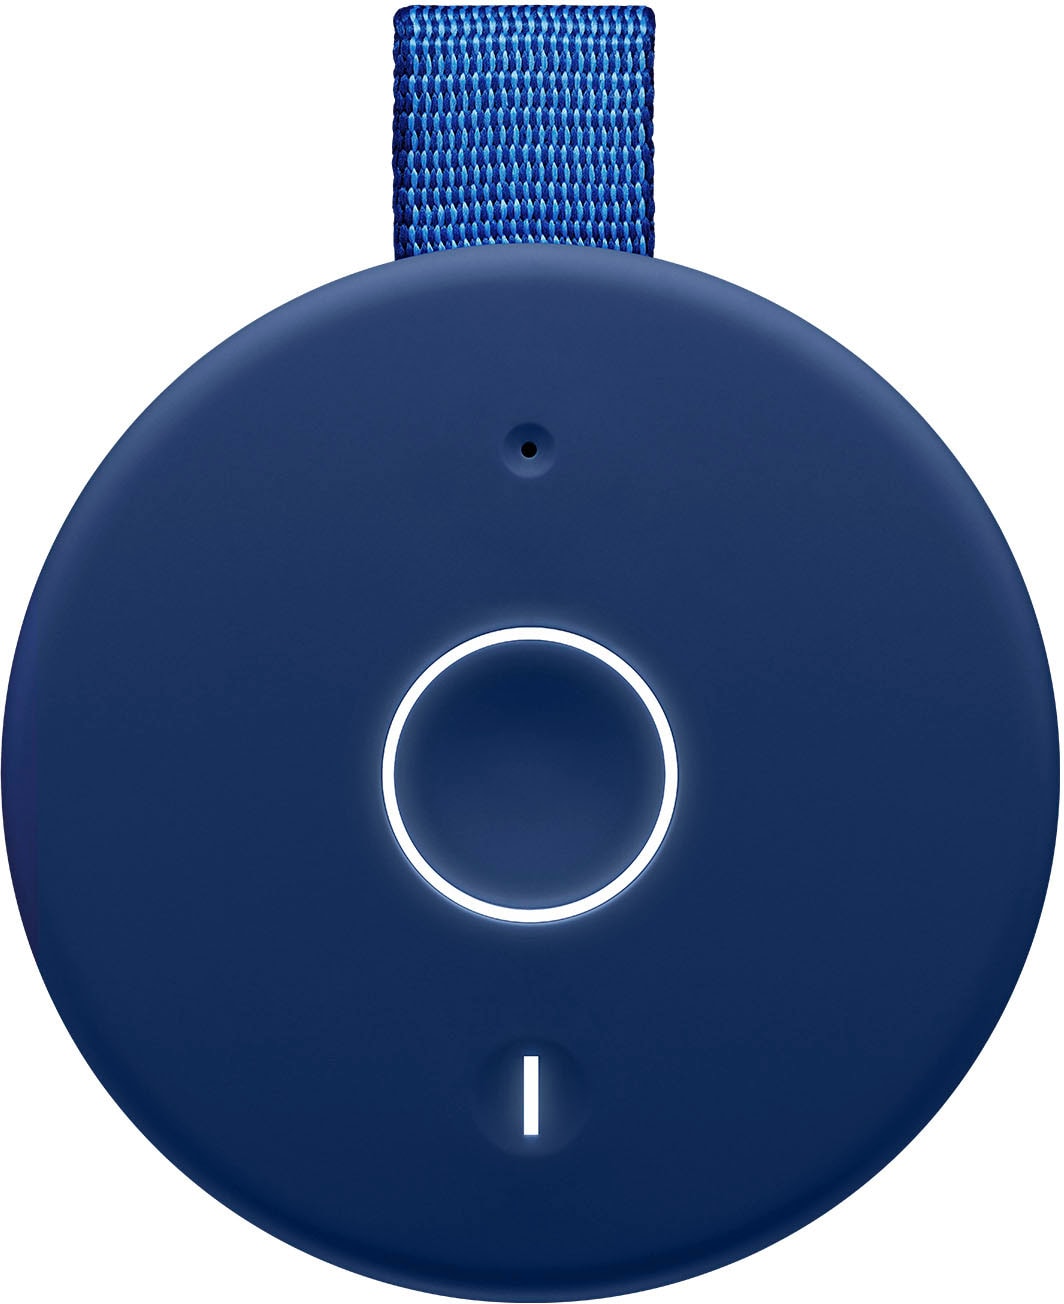 Ultimate Ears - MEGABOOM 3 Portable Wireless Bluetooth Speaker with Waterproof/Dustproof Design - Lagoon Blue_2